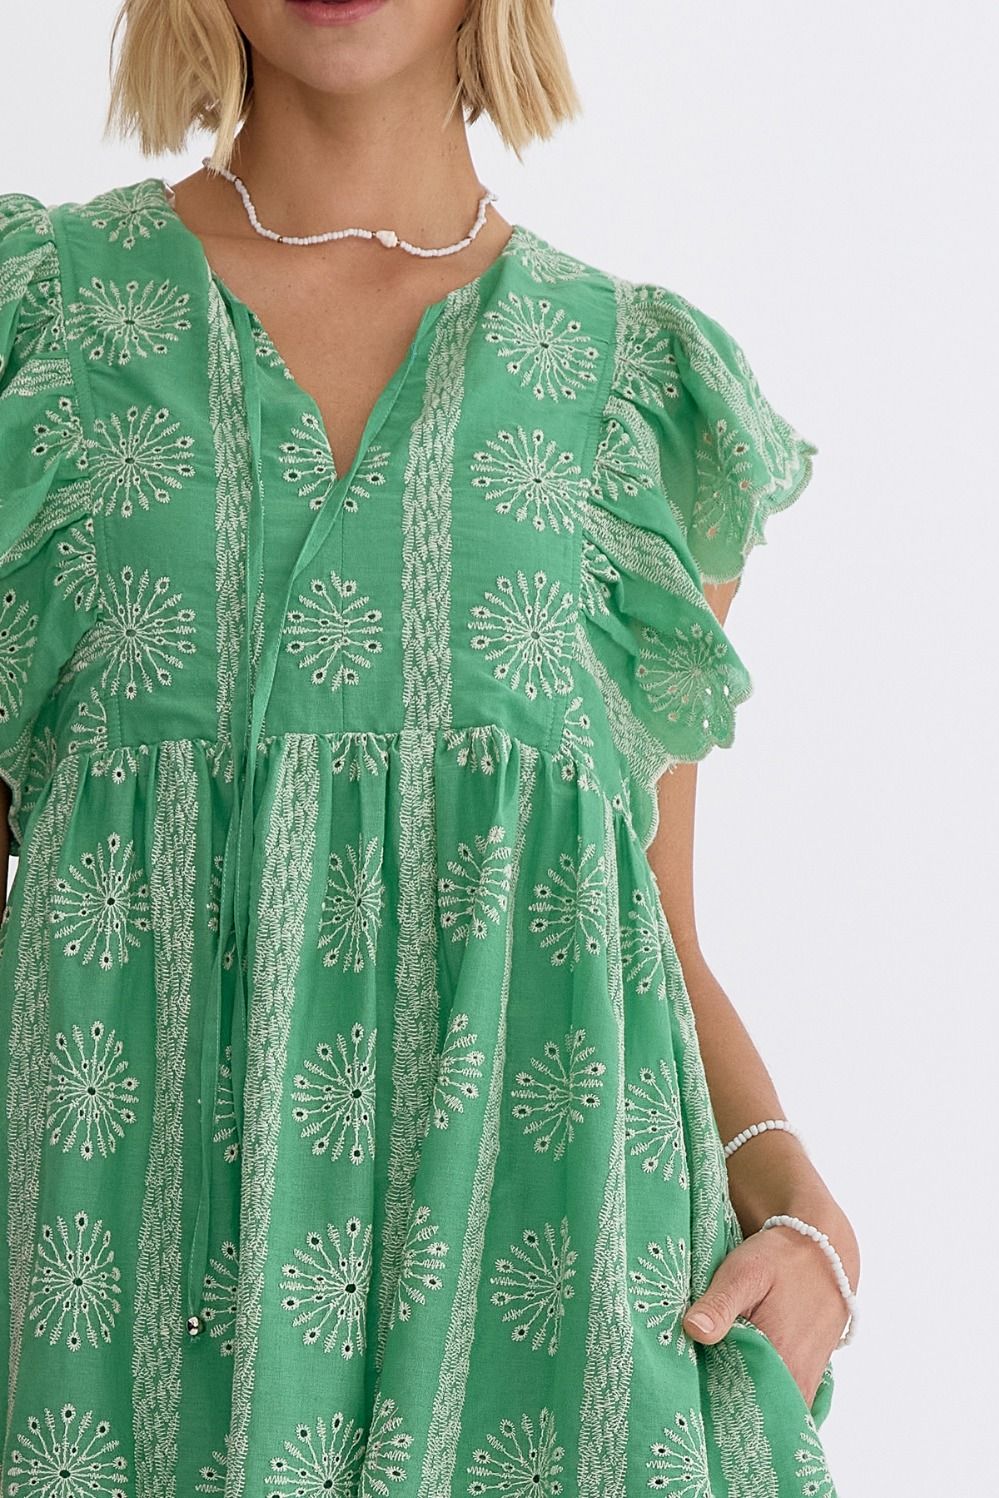 Apple Green Embroidered Sleeveless Dress